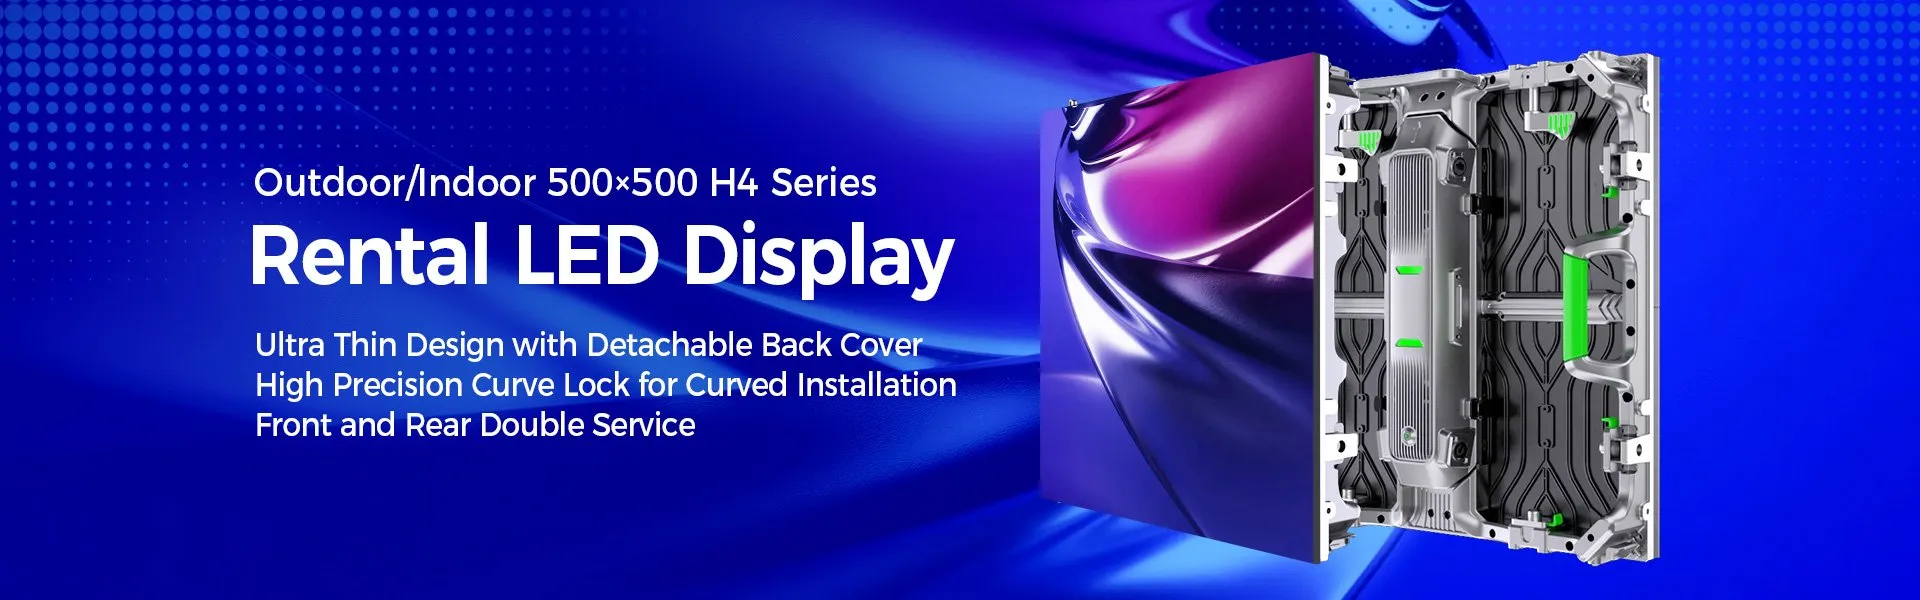 Curved 500×500 Outdoor Rental LED Screen Display 500H4 Series P1.5 P1.9 P2.5 P2.6 P2.9 P3.9 P4.8 P5.9